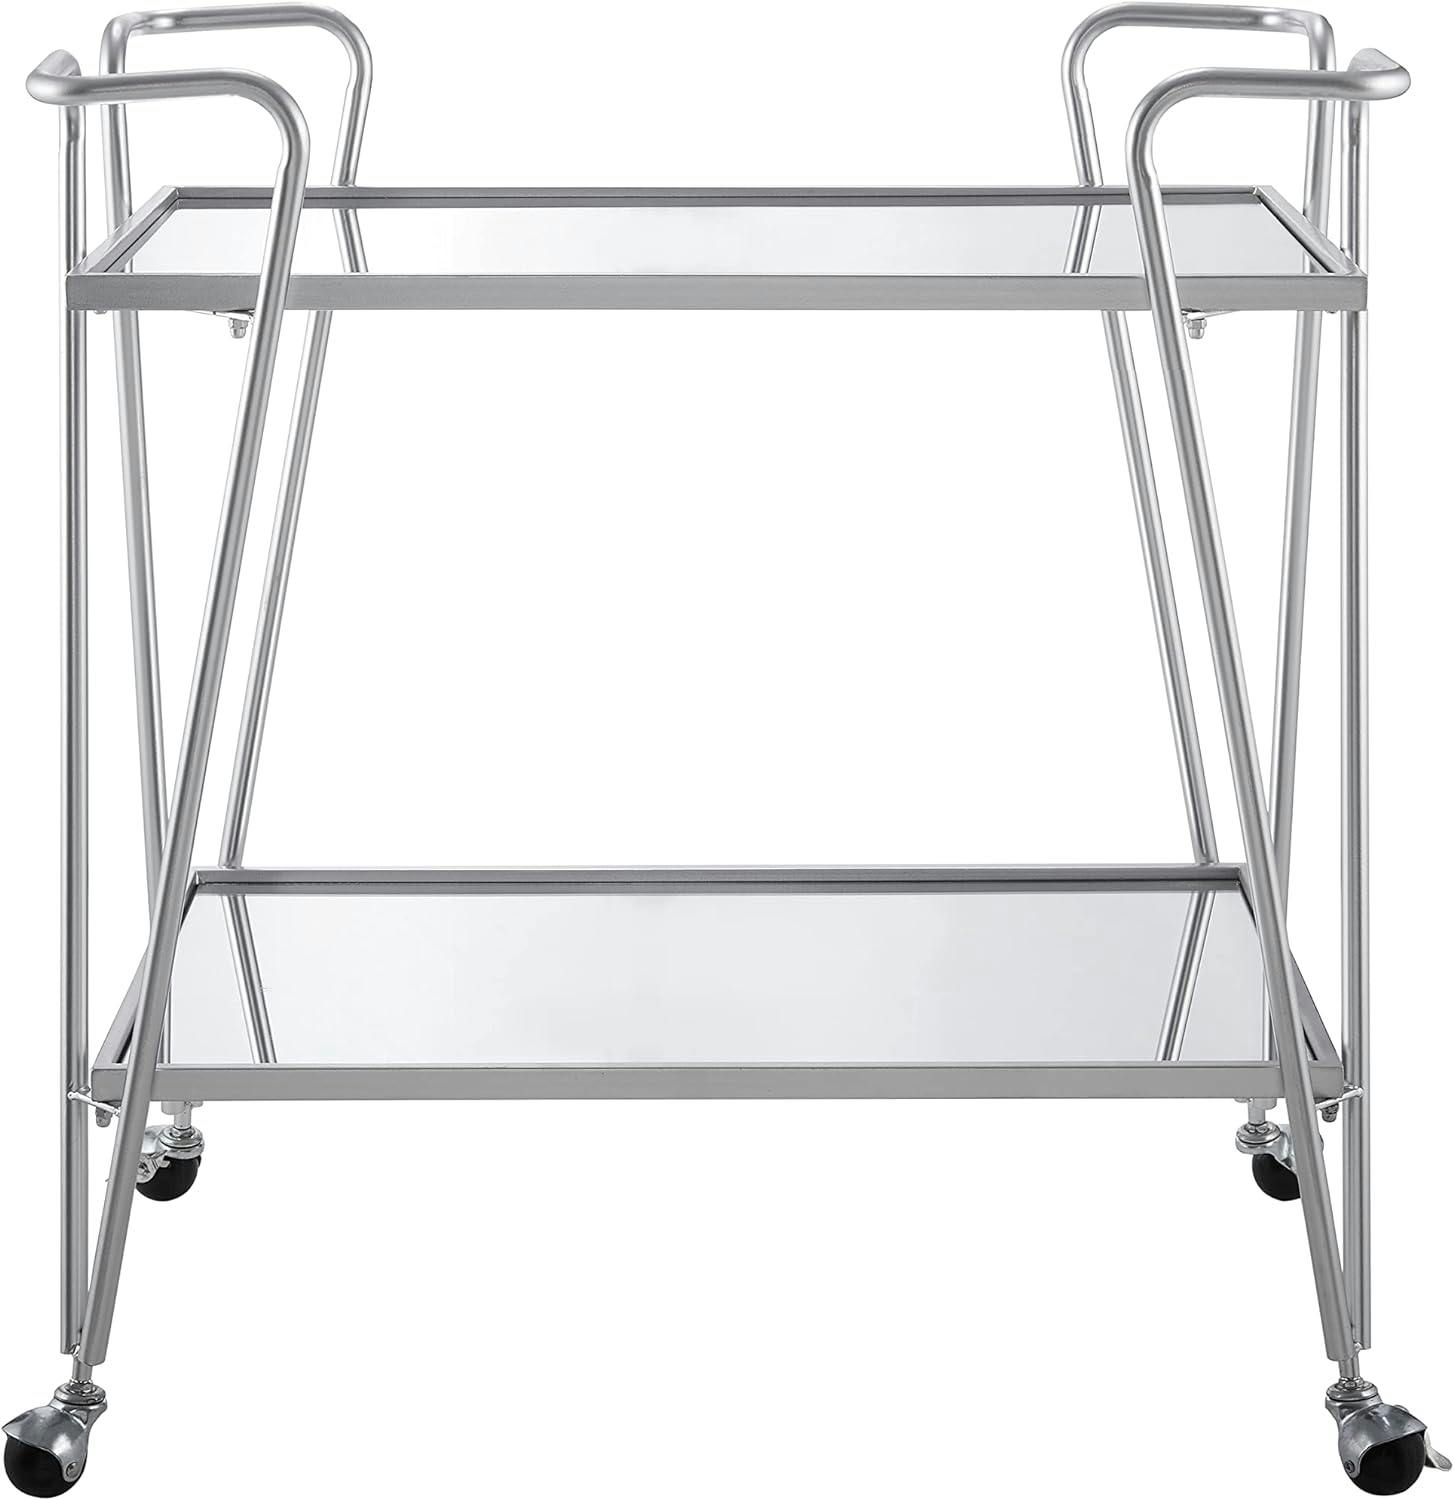 Victoria Polished Metal Mirrored Shelves Bar Cart